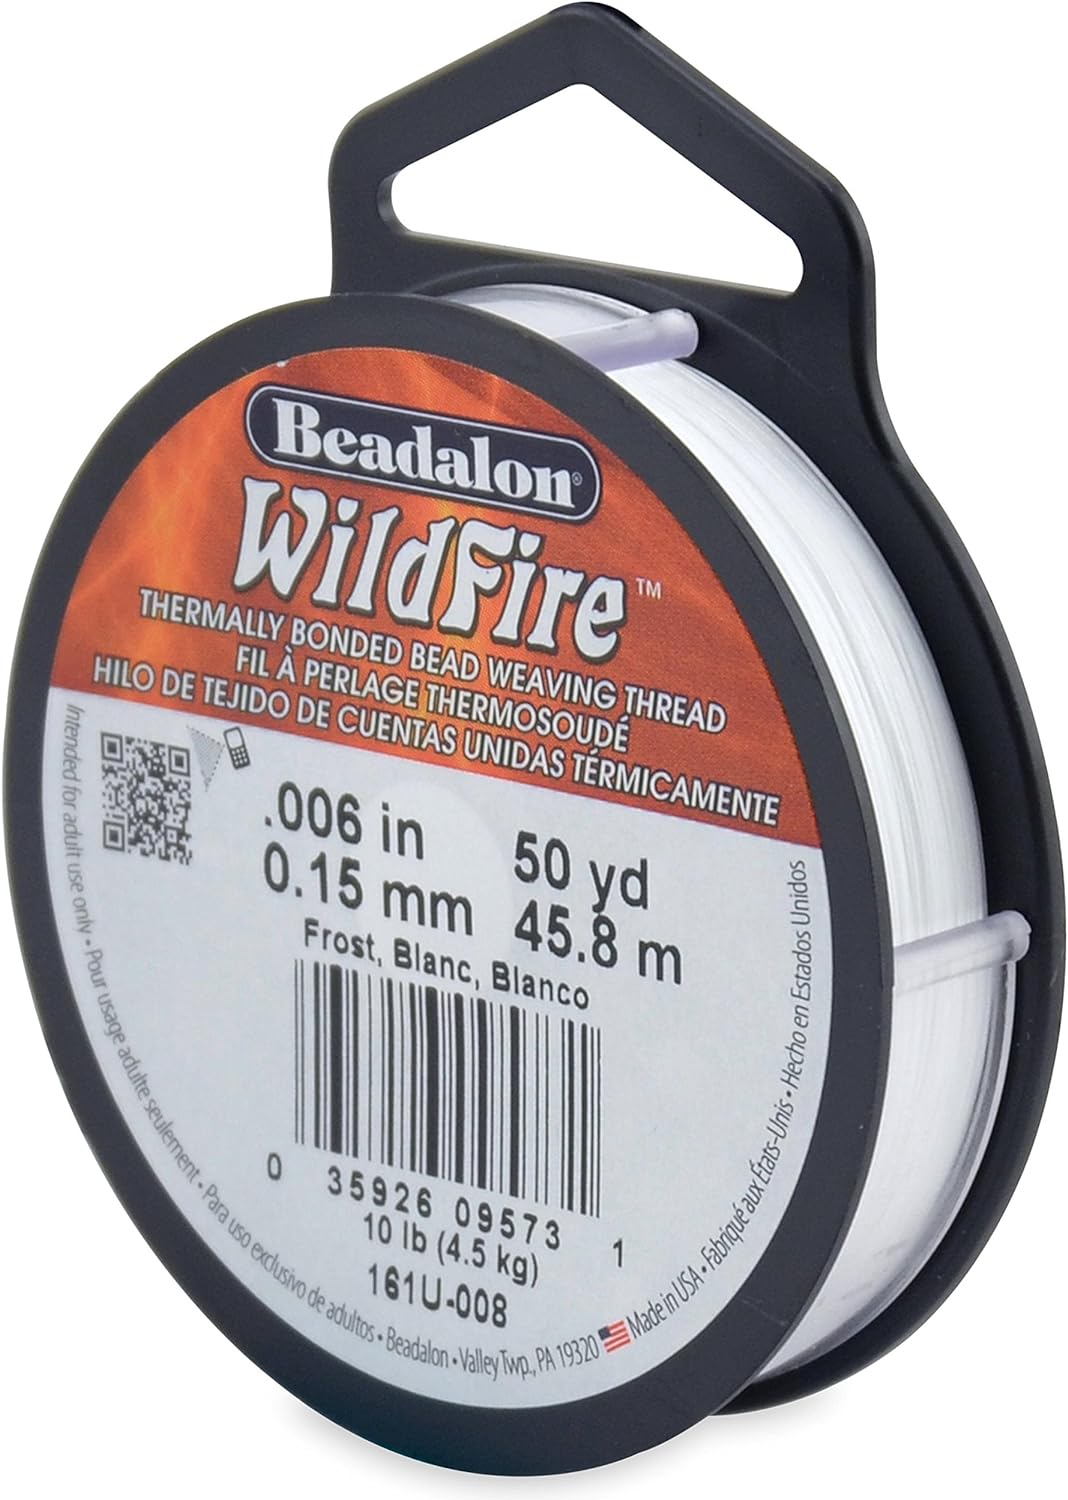 Beadalon - Wildfire 50yd